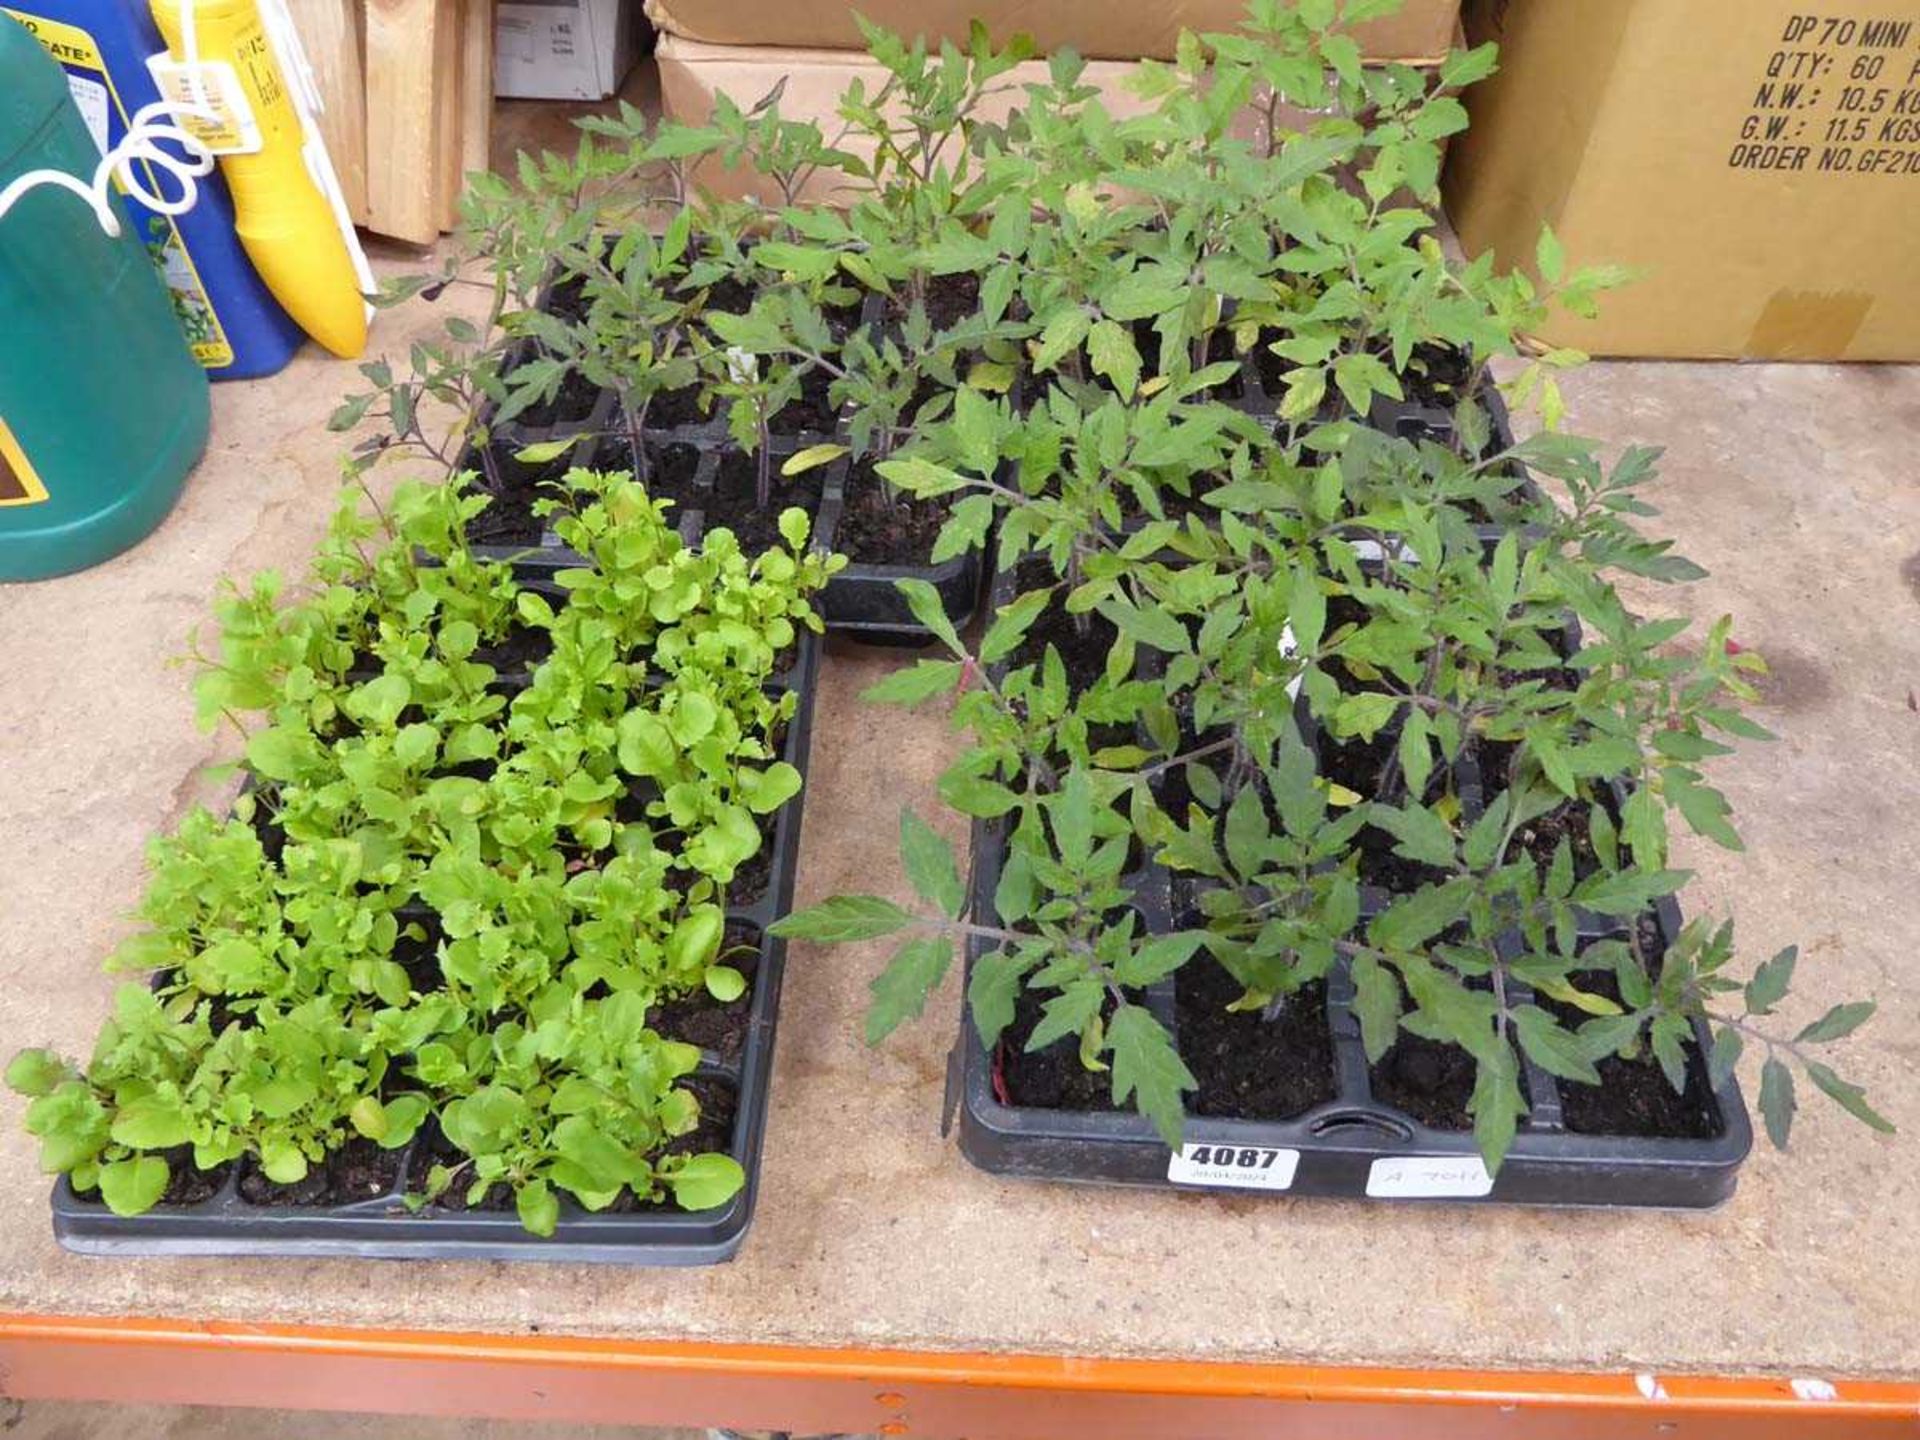 3 Moneymaker tomato plants and tray of lobelia